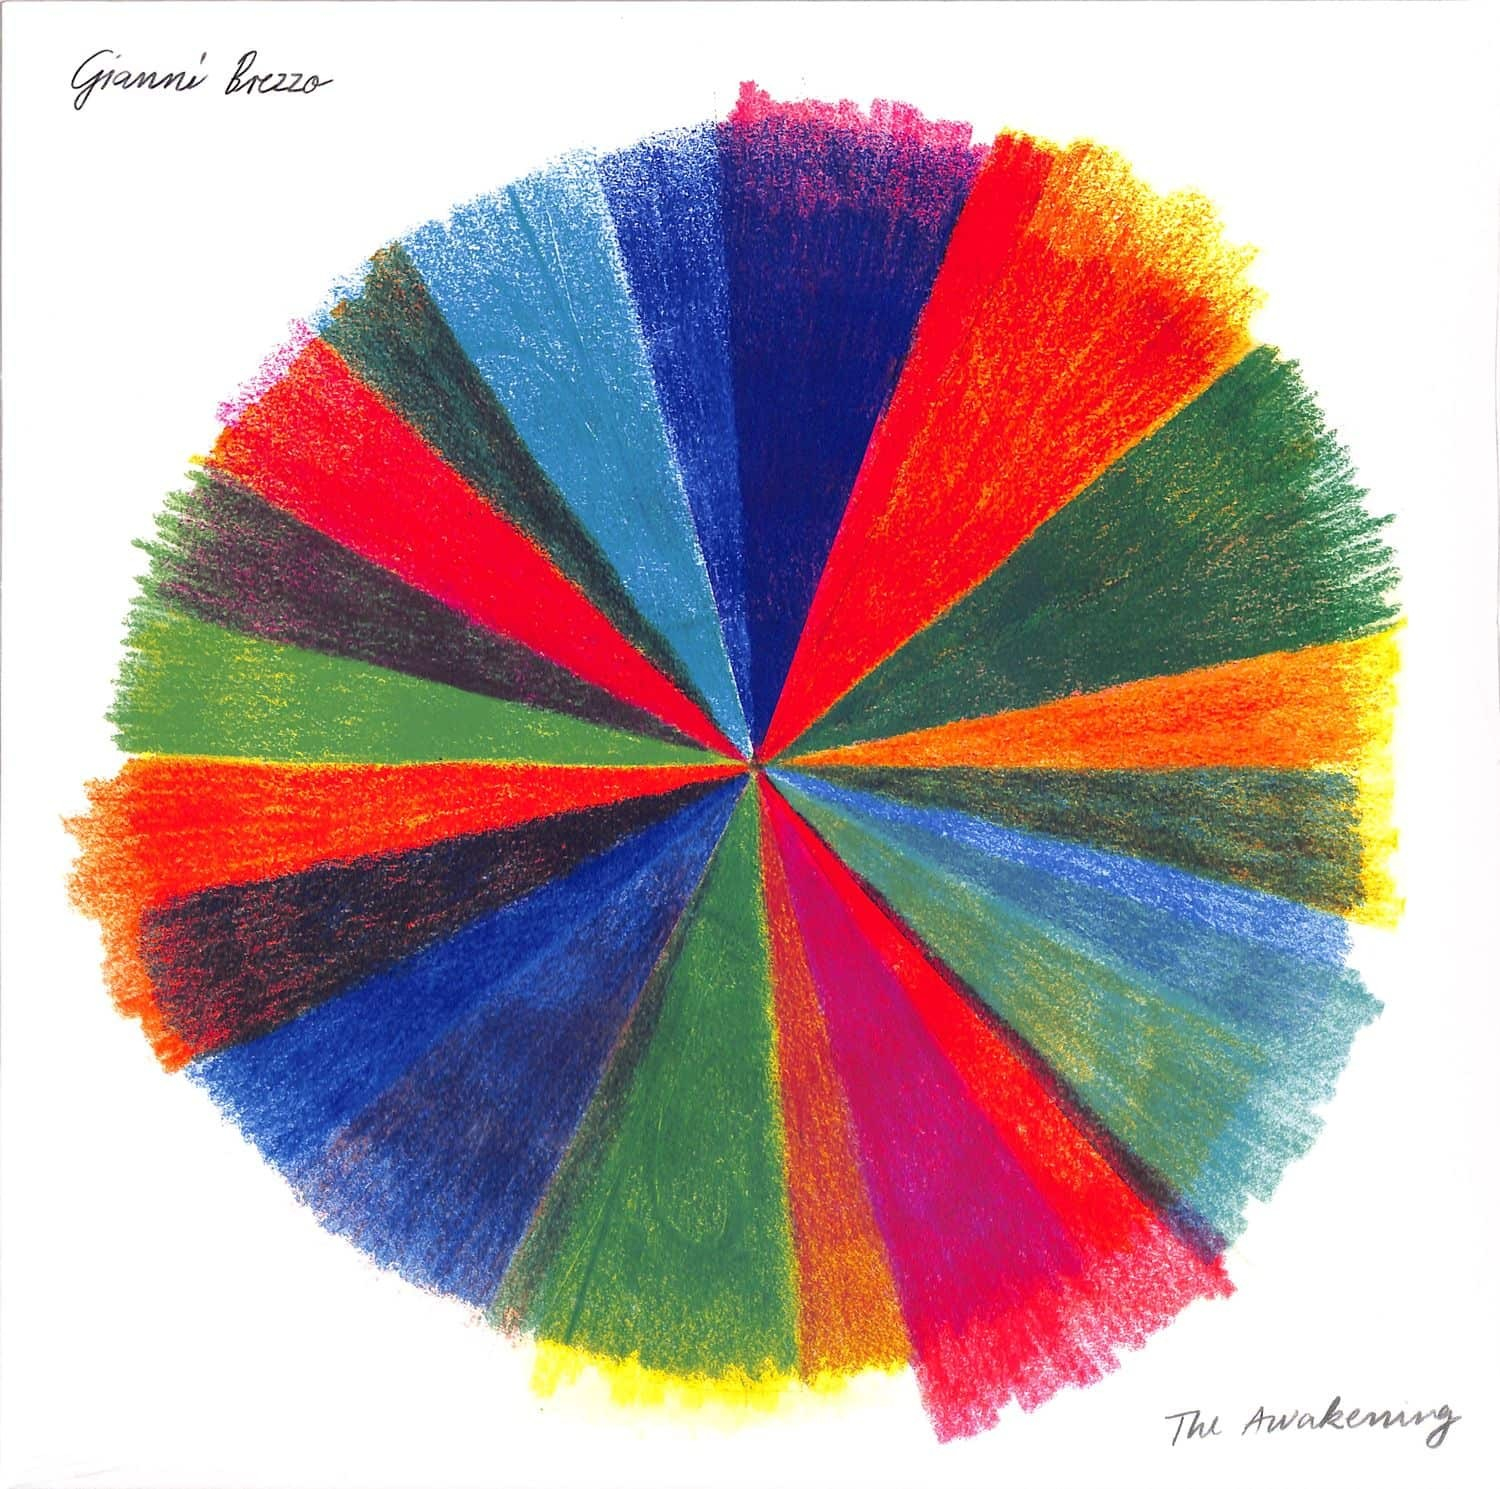 The Awakening (Gianni Brezzo) (Vinyl / 12" Album)